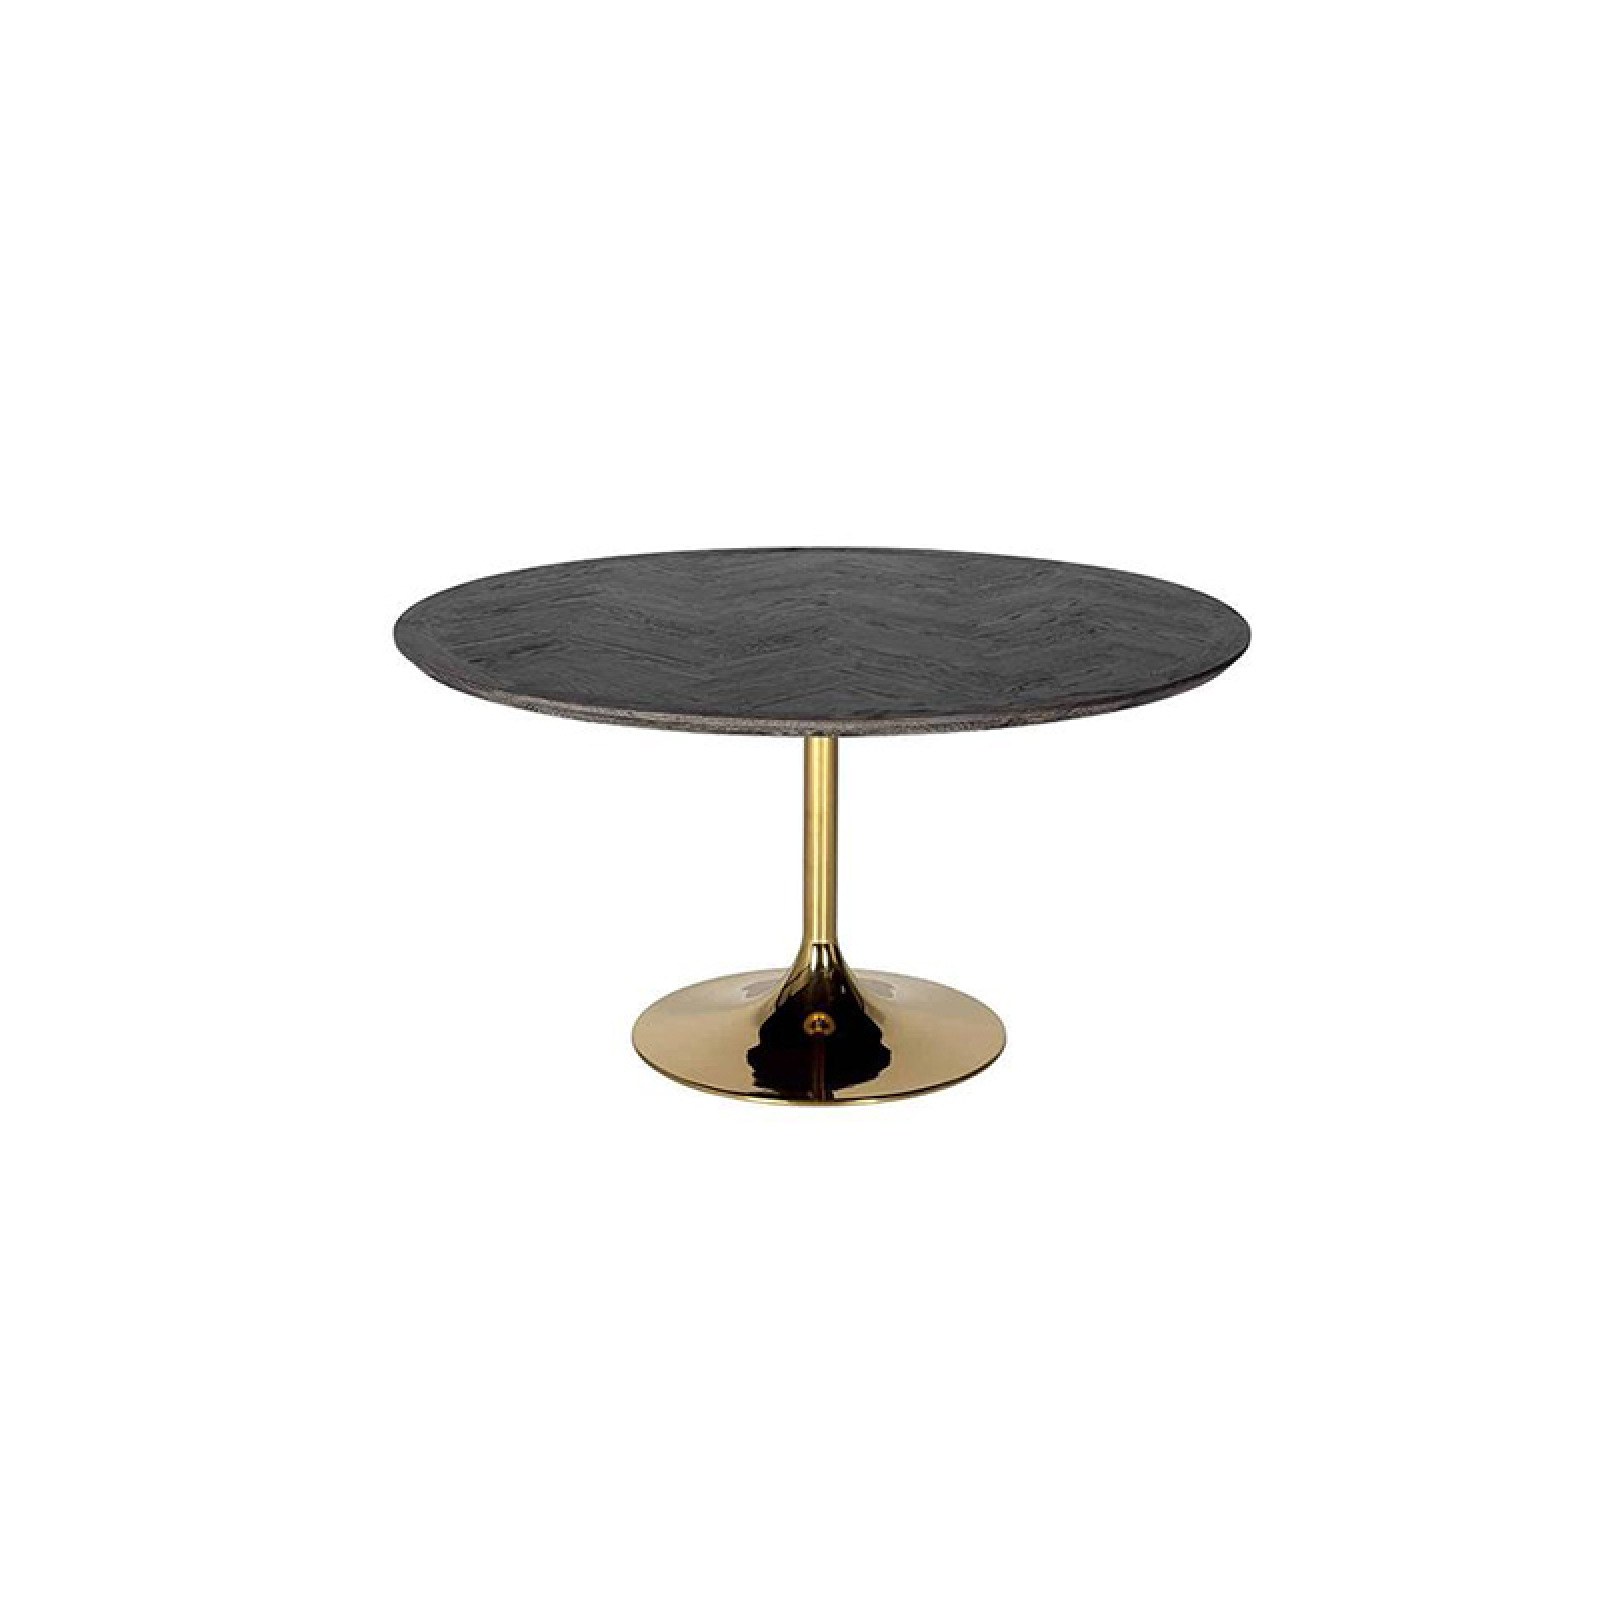 Blackbone gold dining table